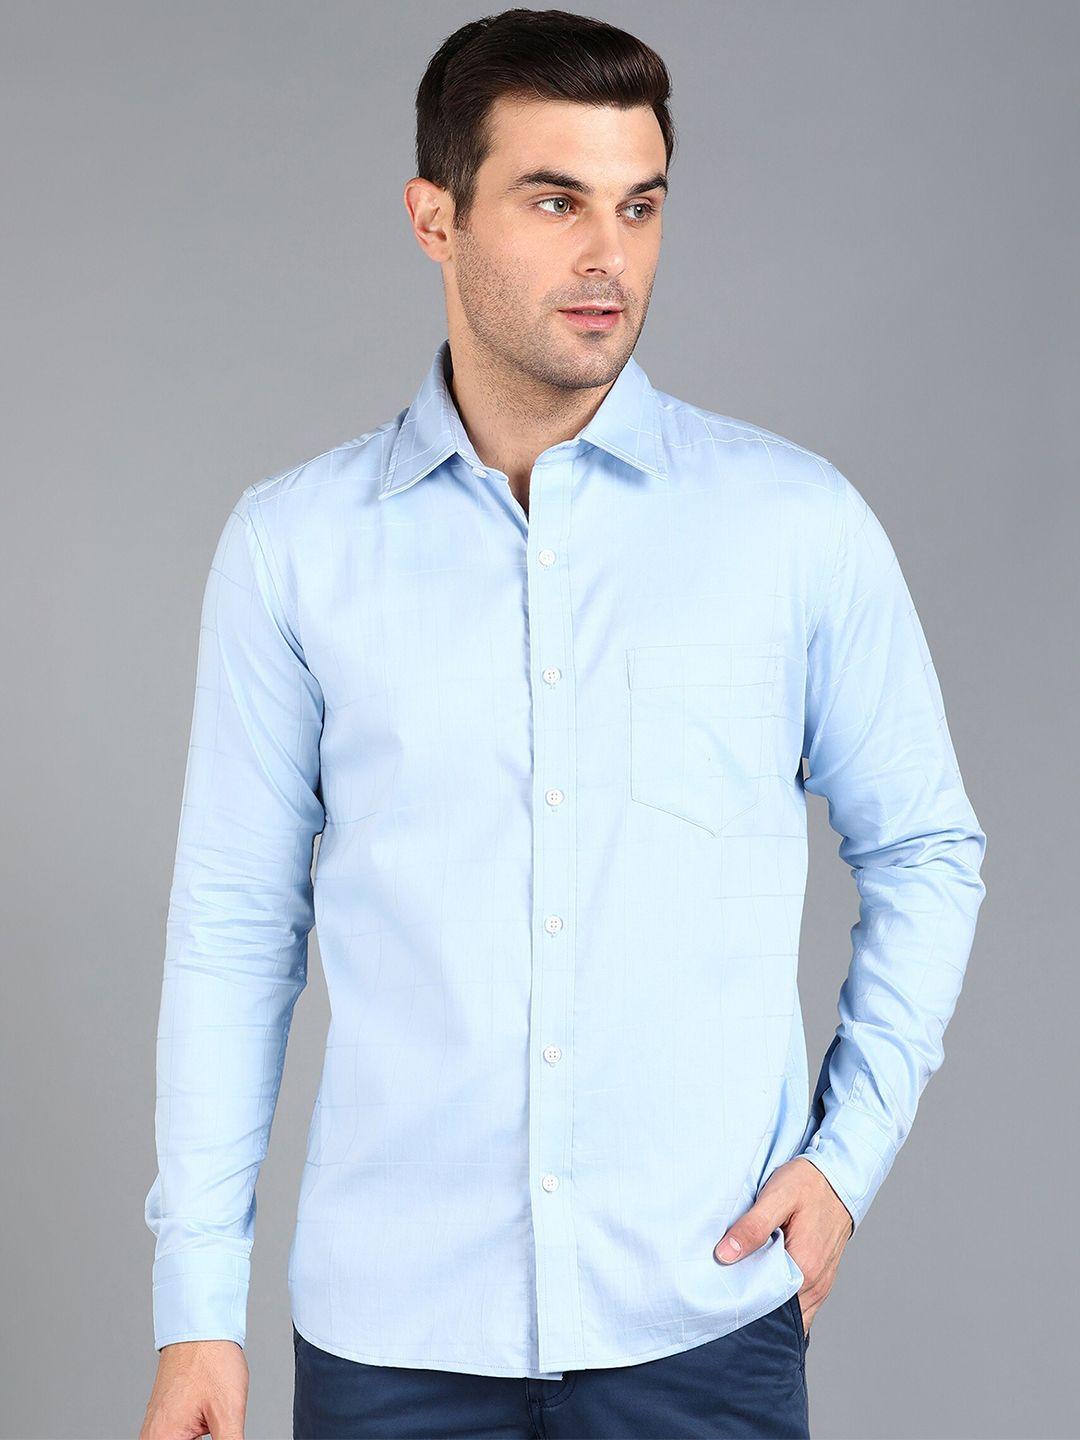 znx-clothing-men-blue-premium-slim-fit-opaque-formal-shirt